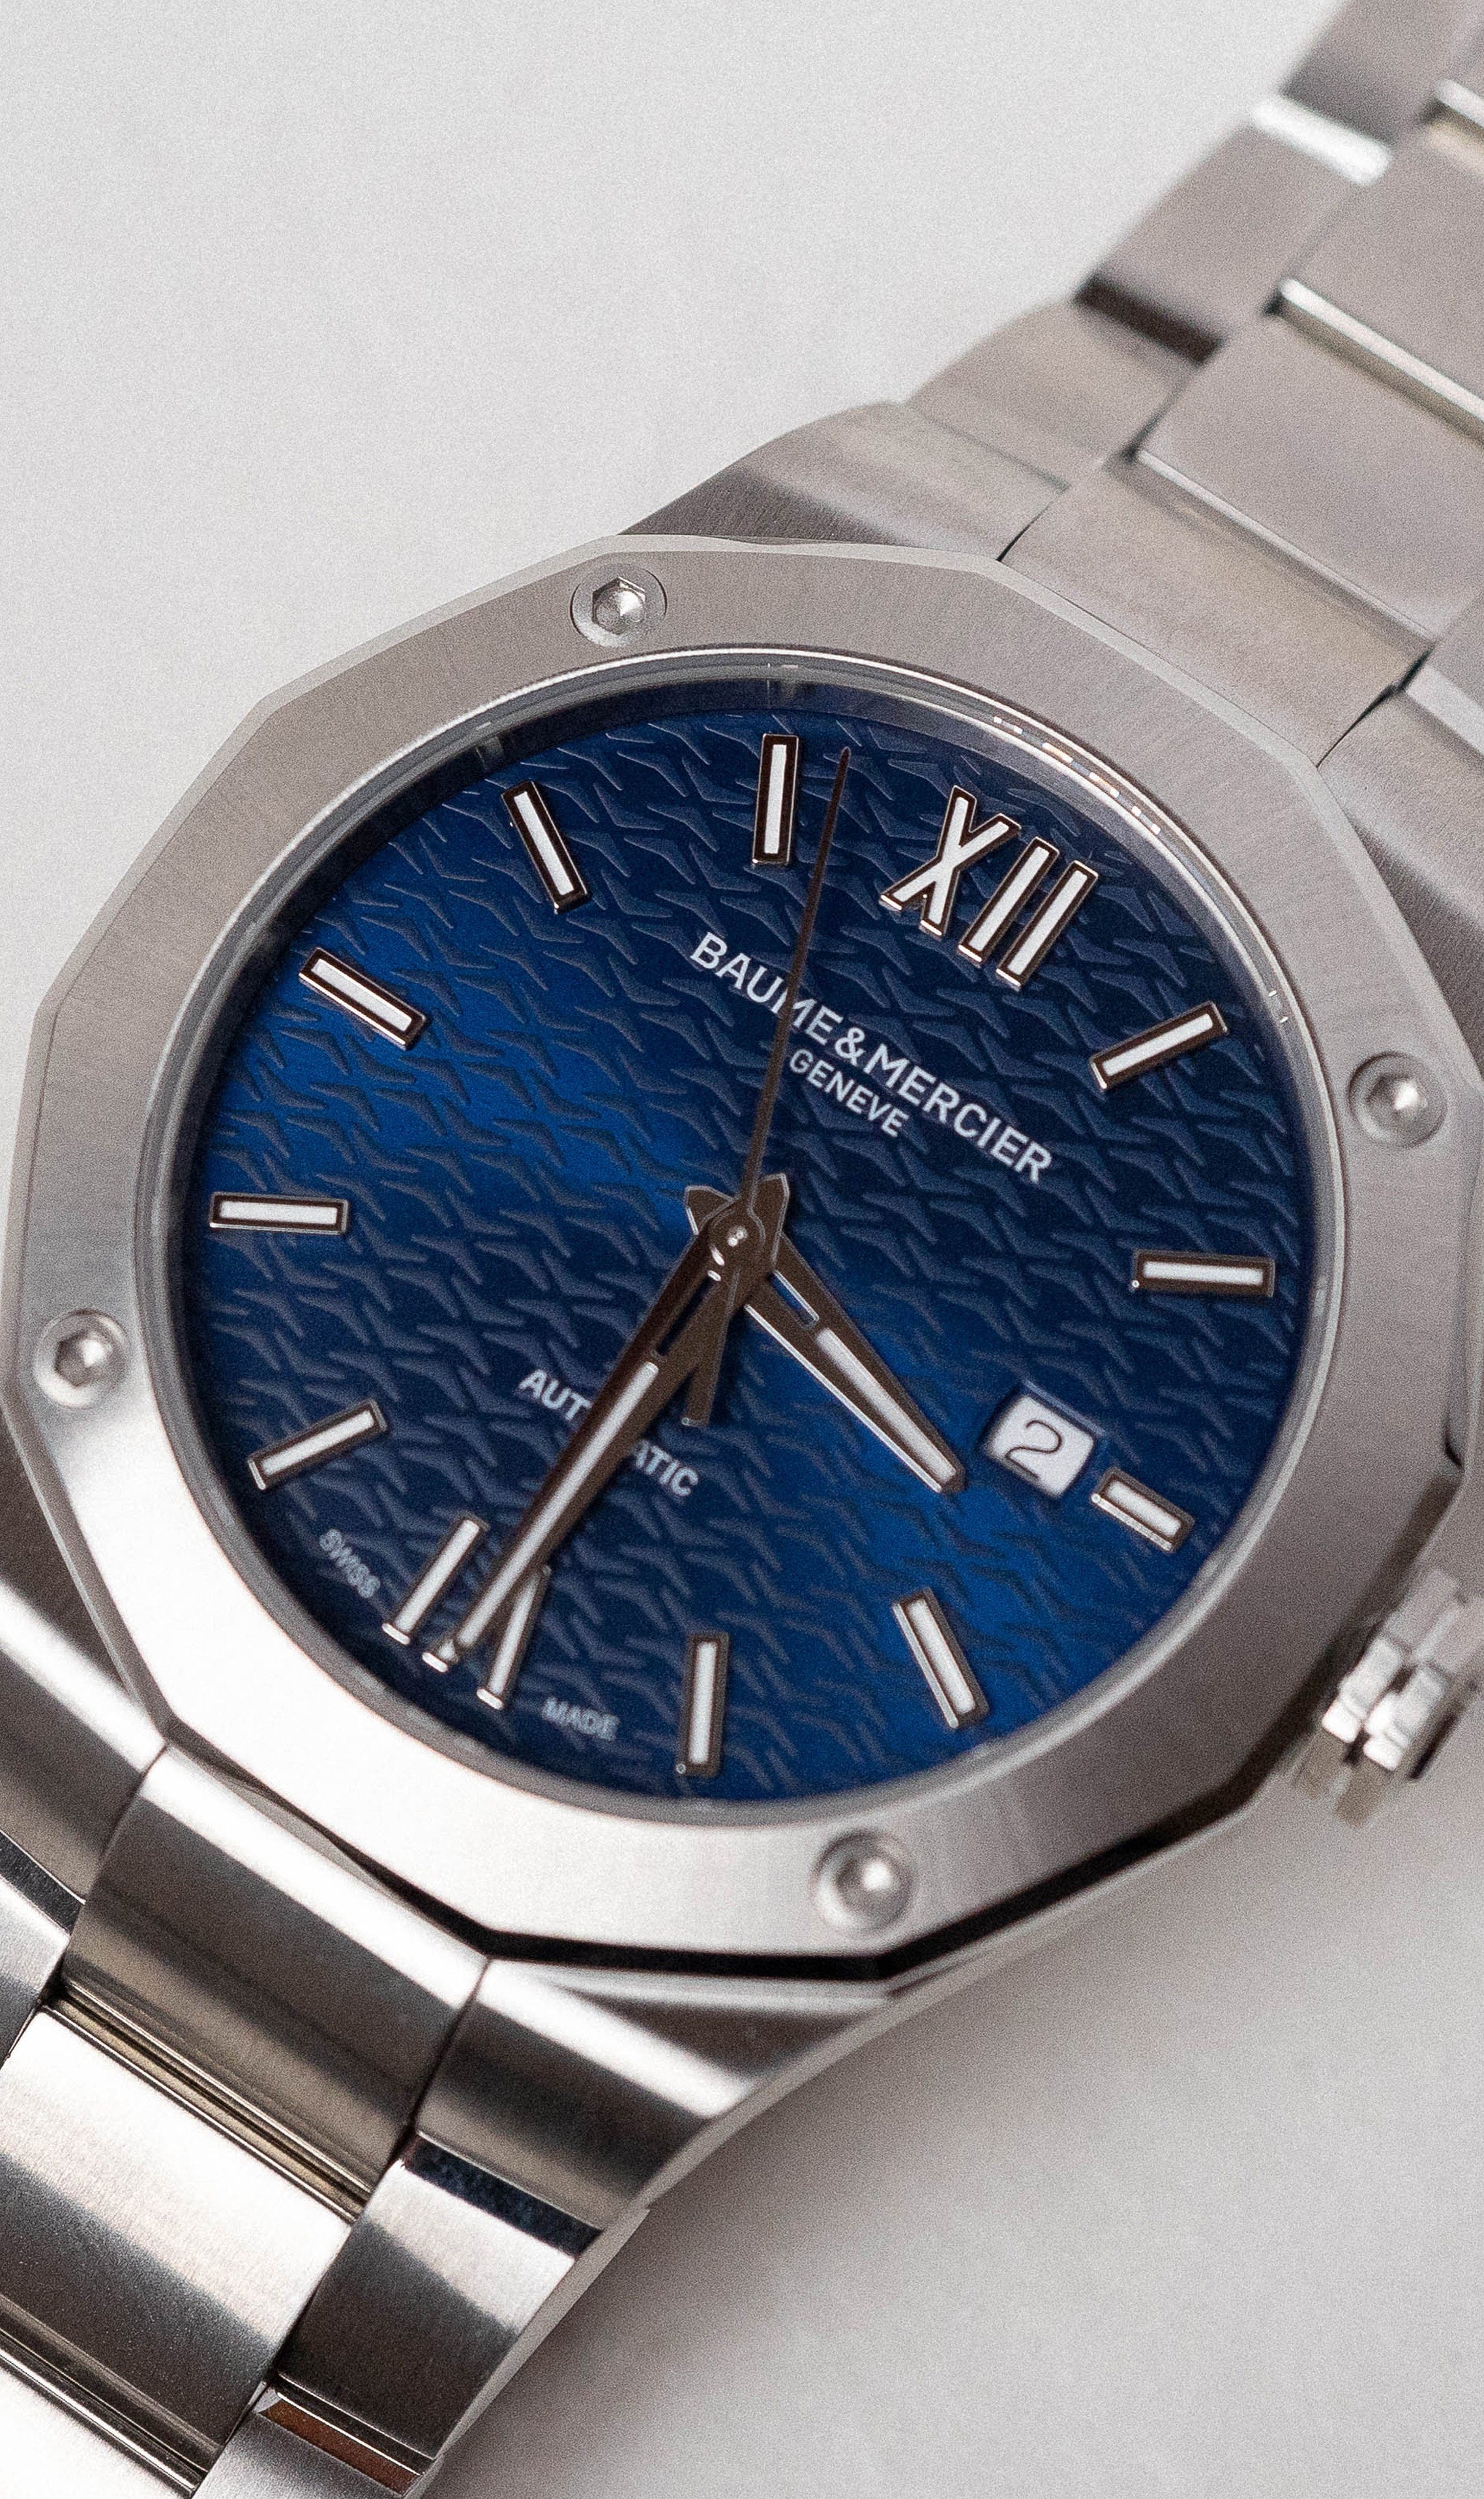 Hogans Family Jewellers Baume & Mercier Men's Riviera 10620 Watch